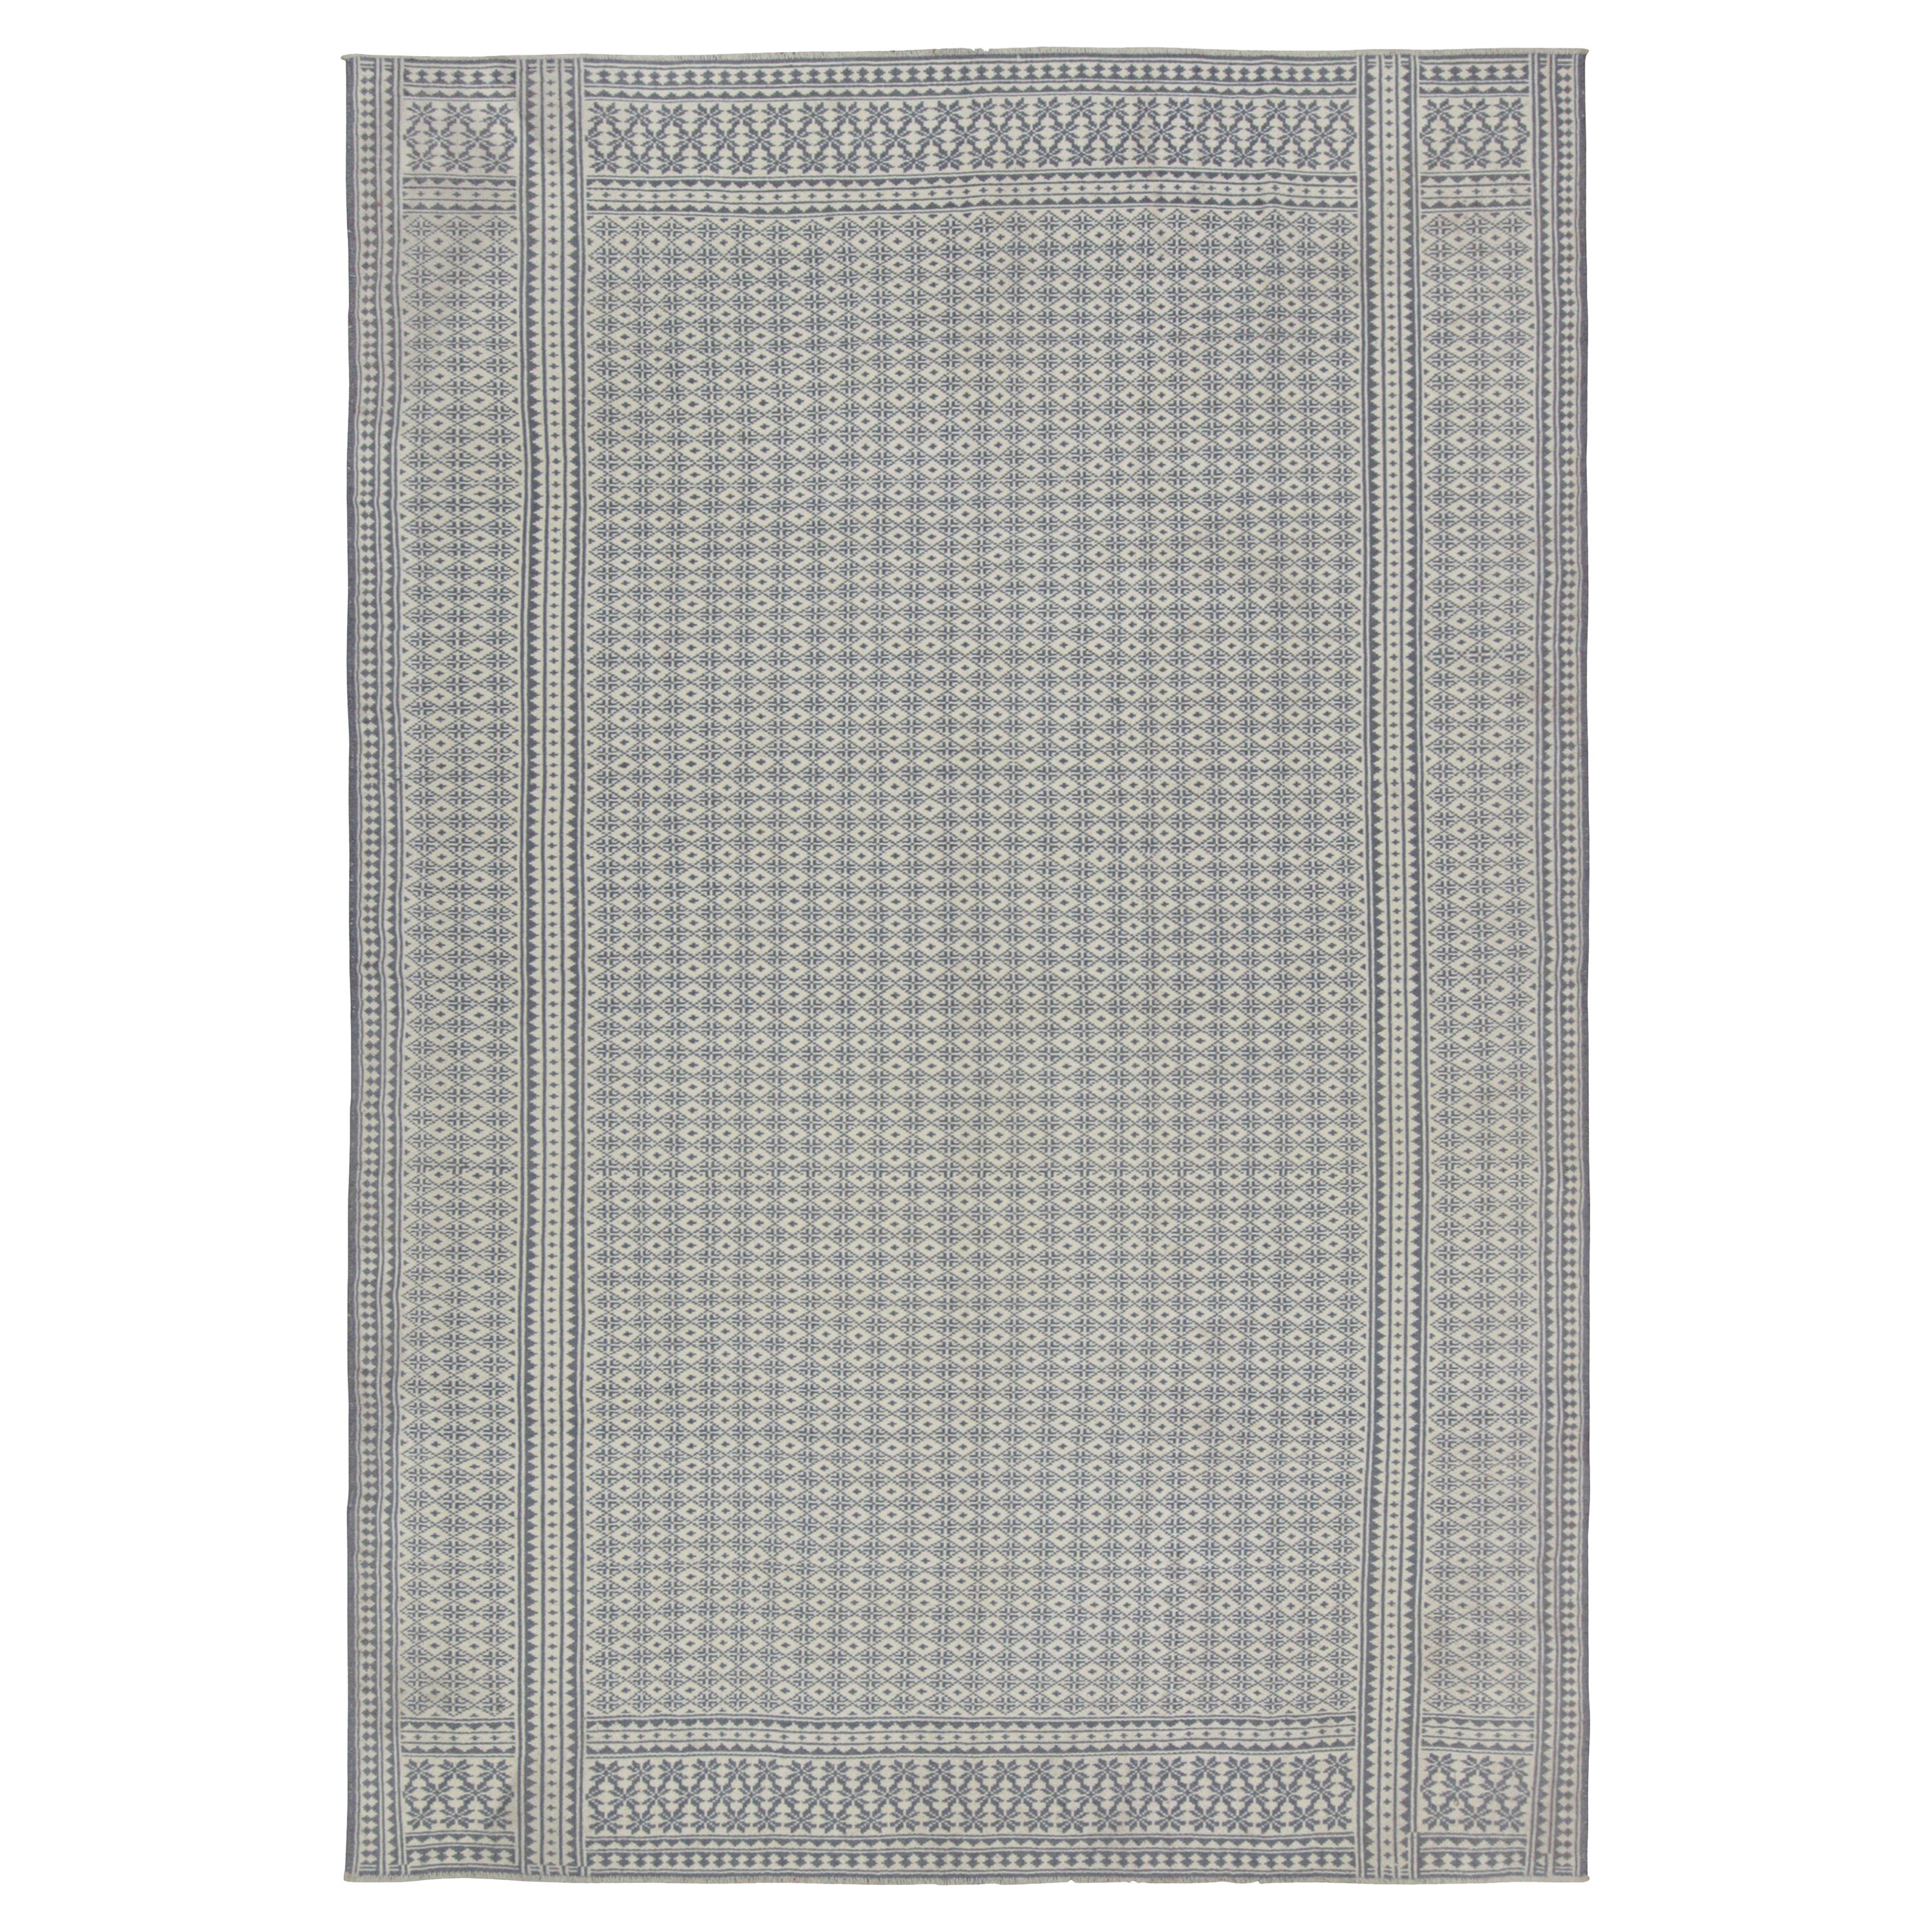 Rug & Kilim’s Zilu Style Kilim in White and Blue-Gray Geometric Pattern 